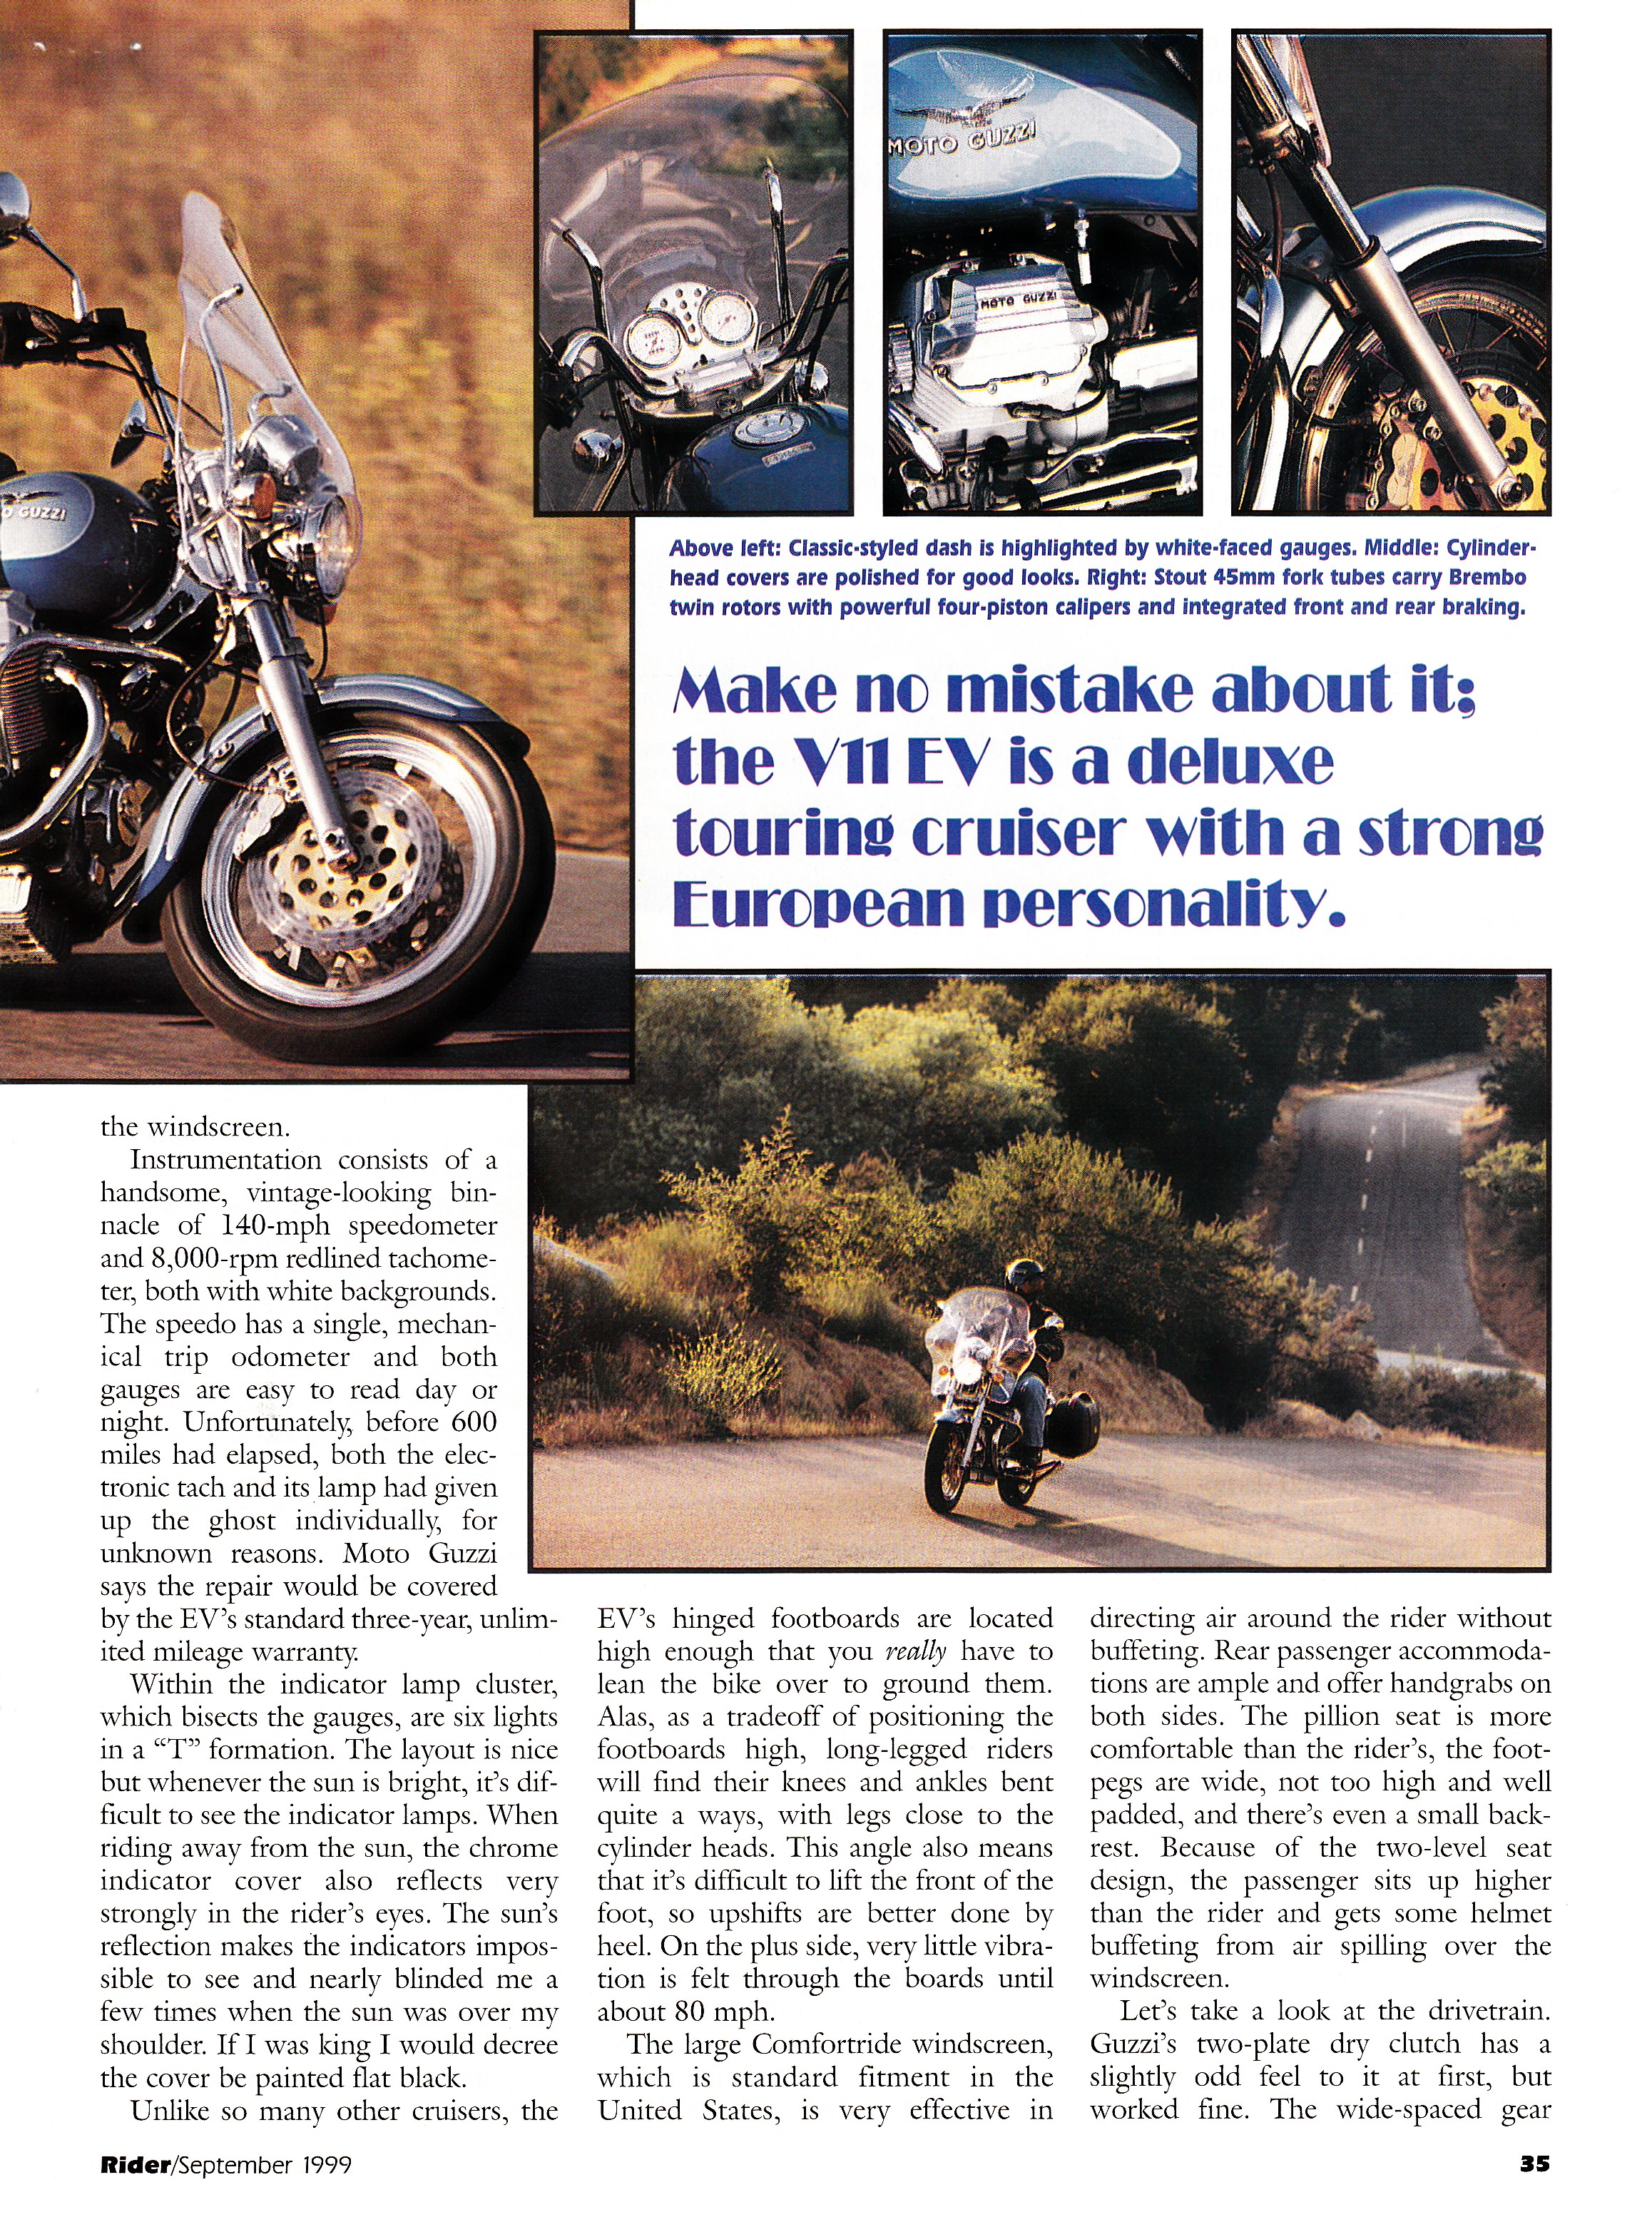 Article - Rider (1999 September) La bella macchina: The 1999 Moto Guzzi California V11 EV.